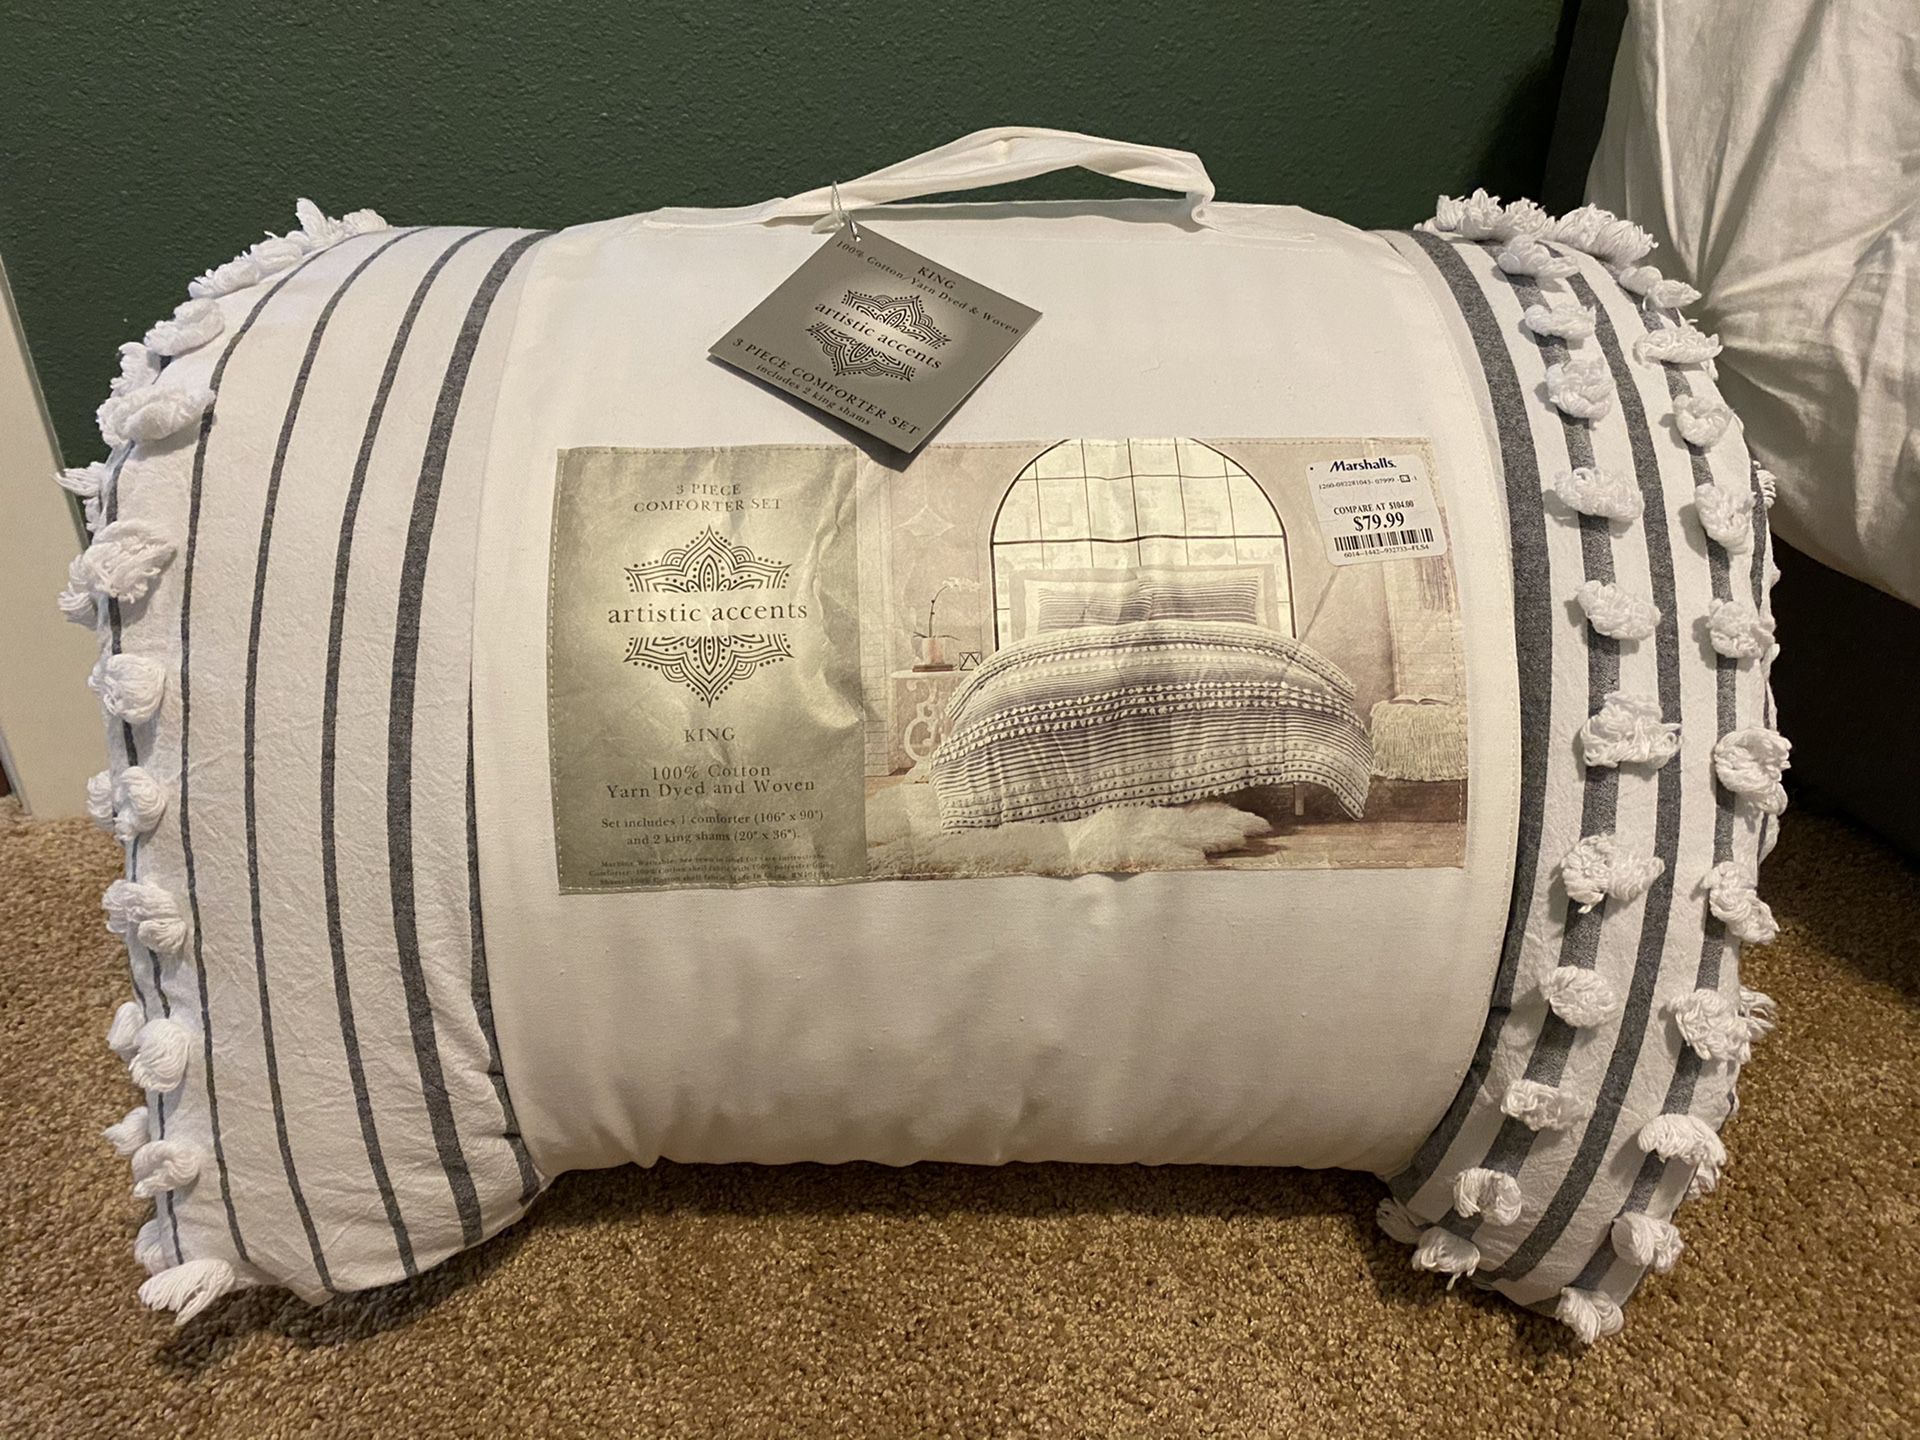 King comforter set/ blanket